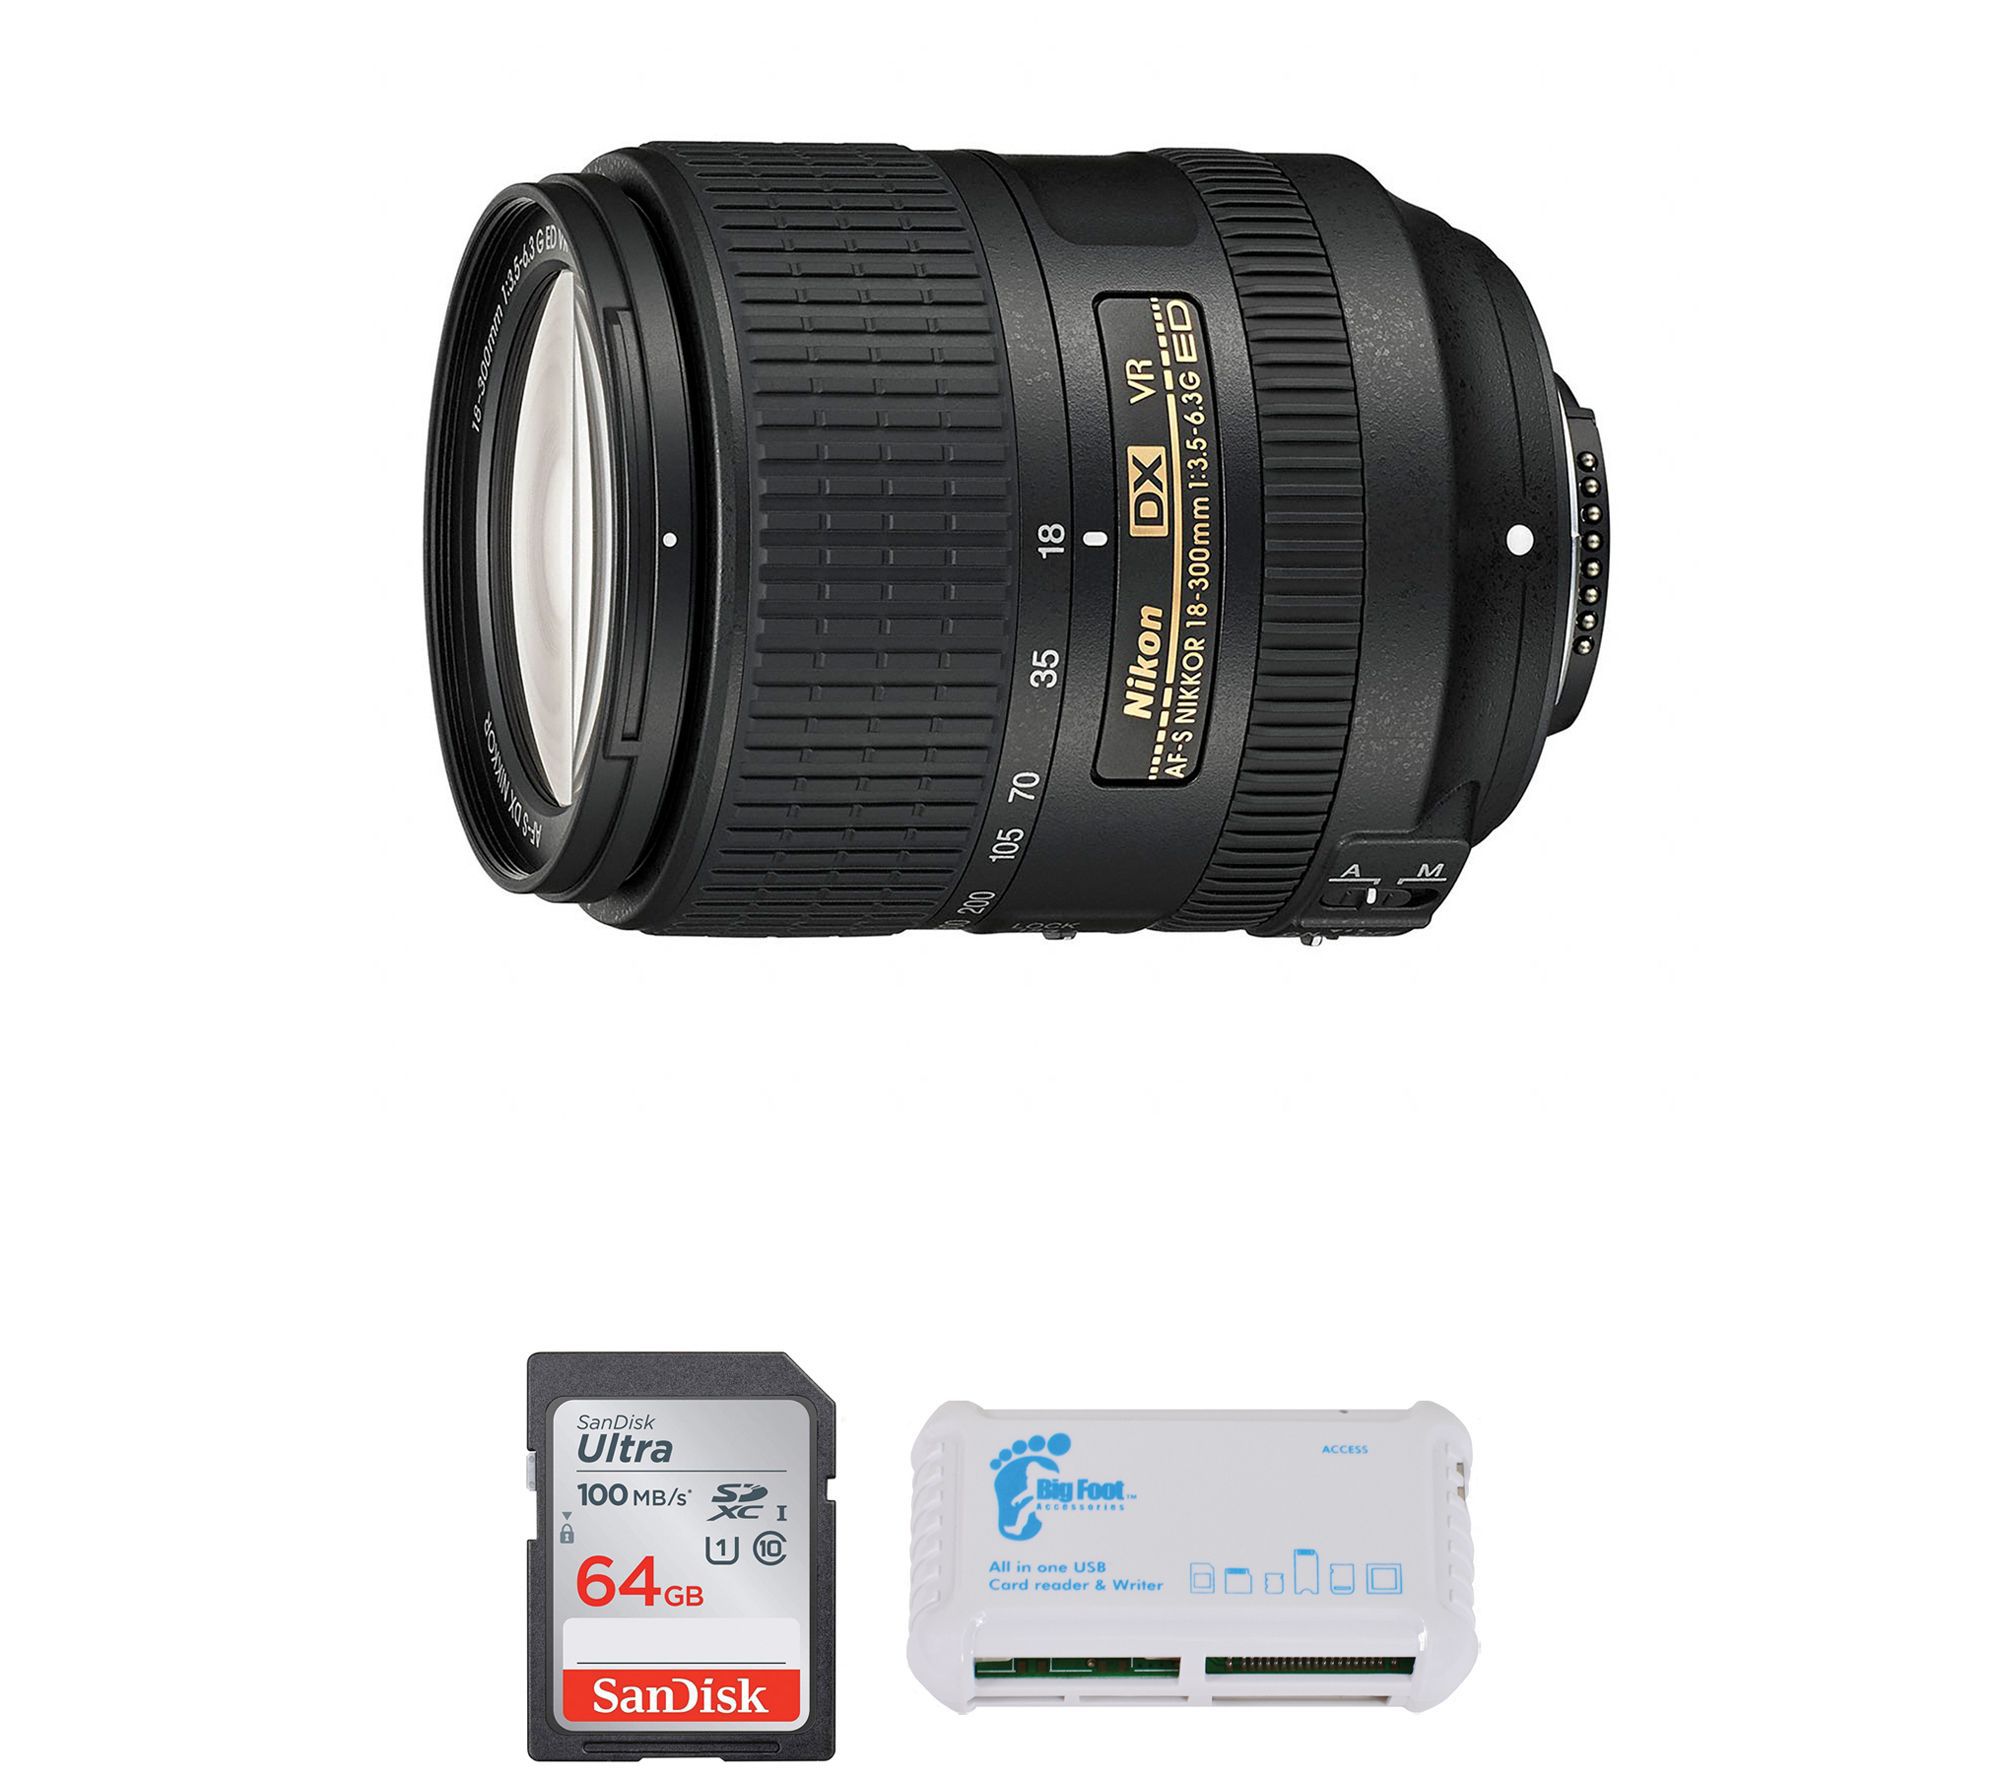 Nikon NIKKOR 18-300mm f/3.5-6.3G ED VR Lens Bundle - QVC.com